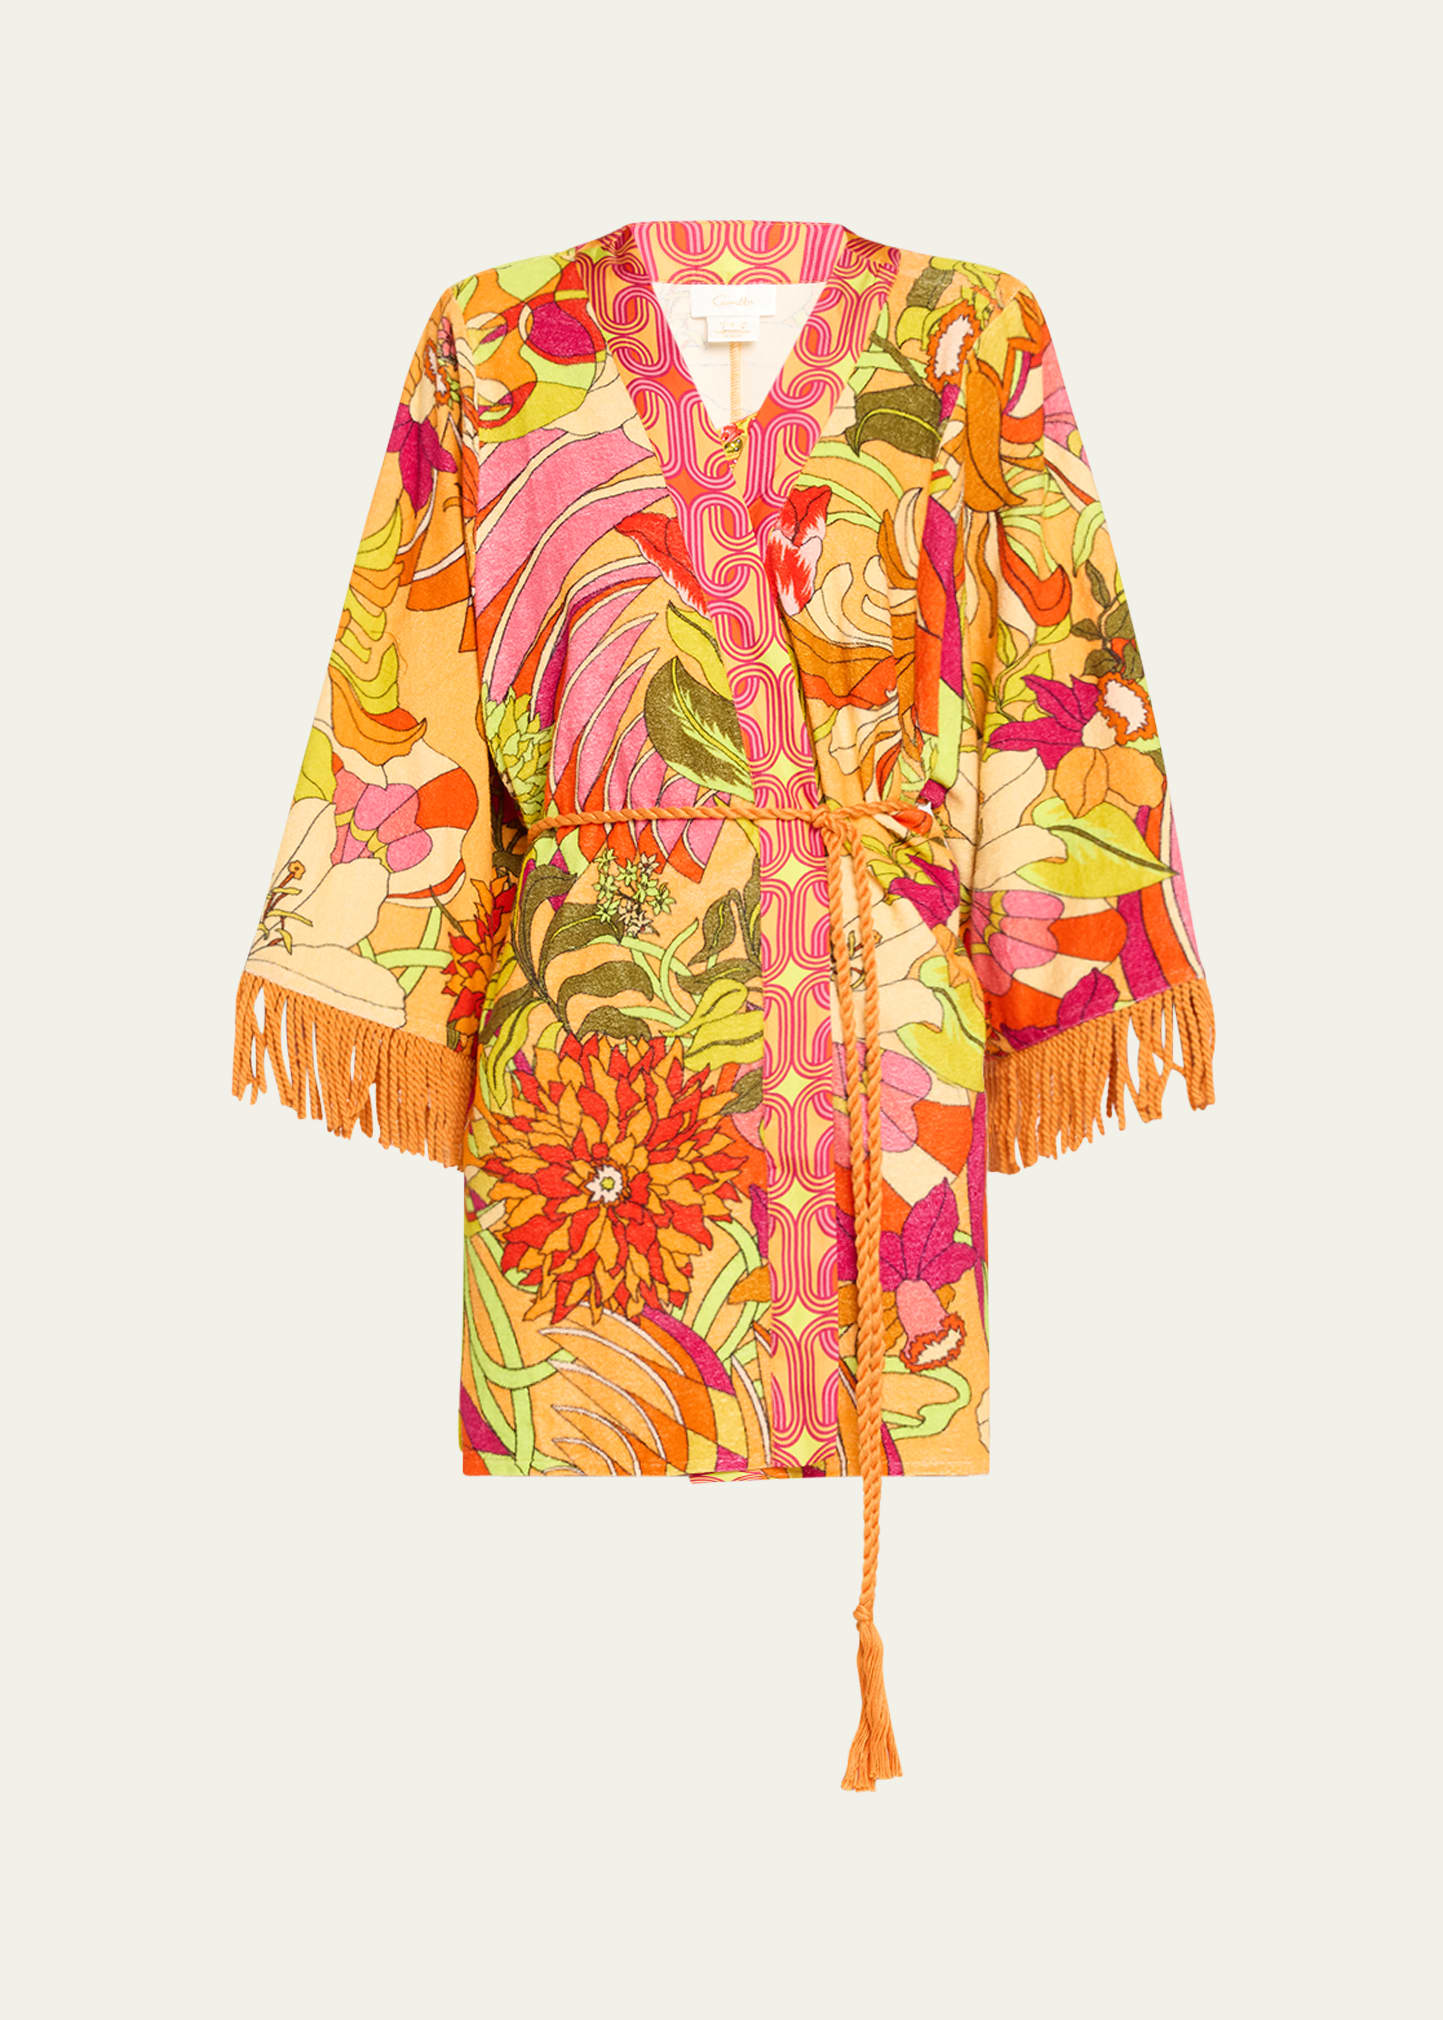 The Flower Child Society Terry Cloth Kimono Coverup